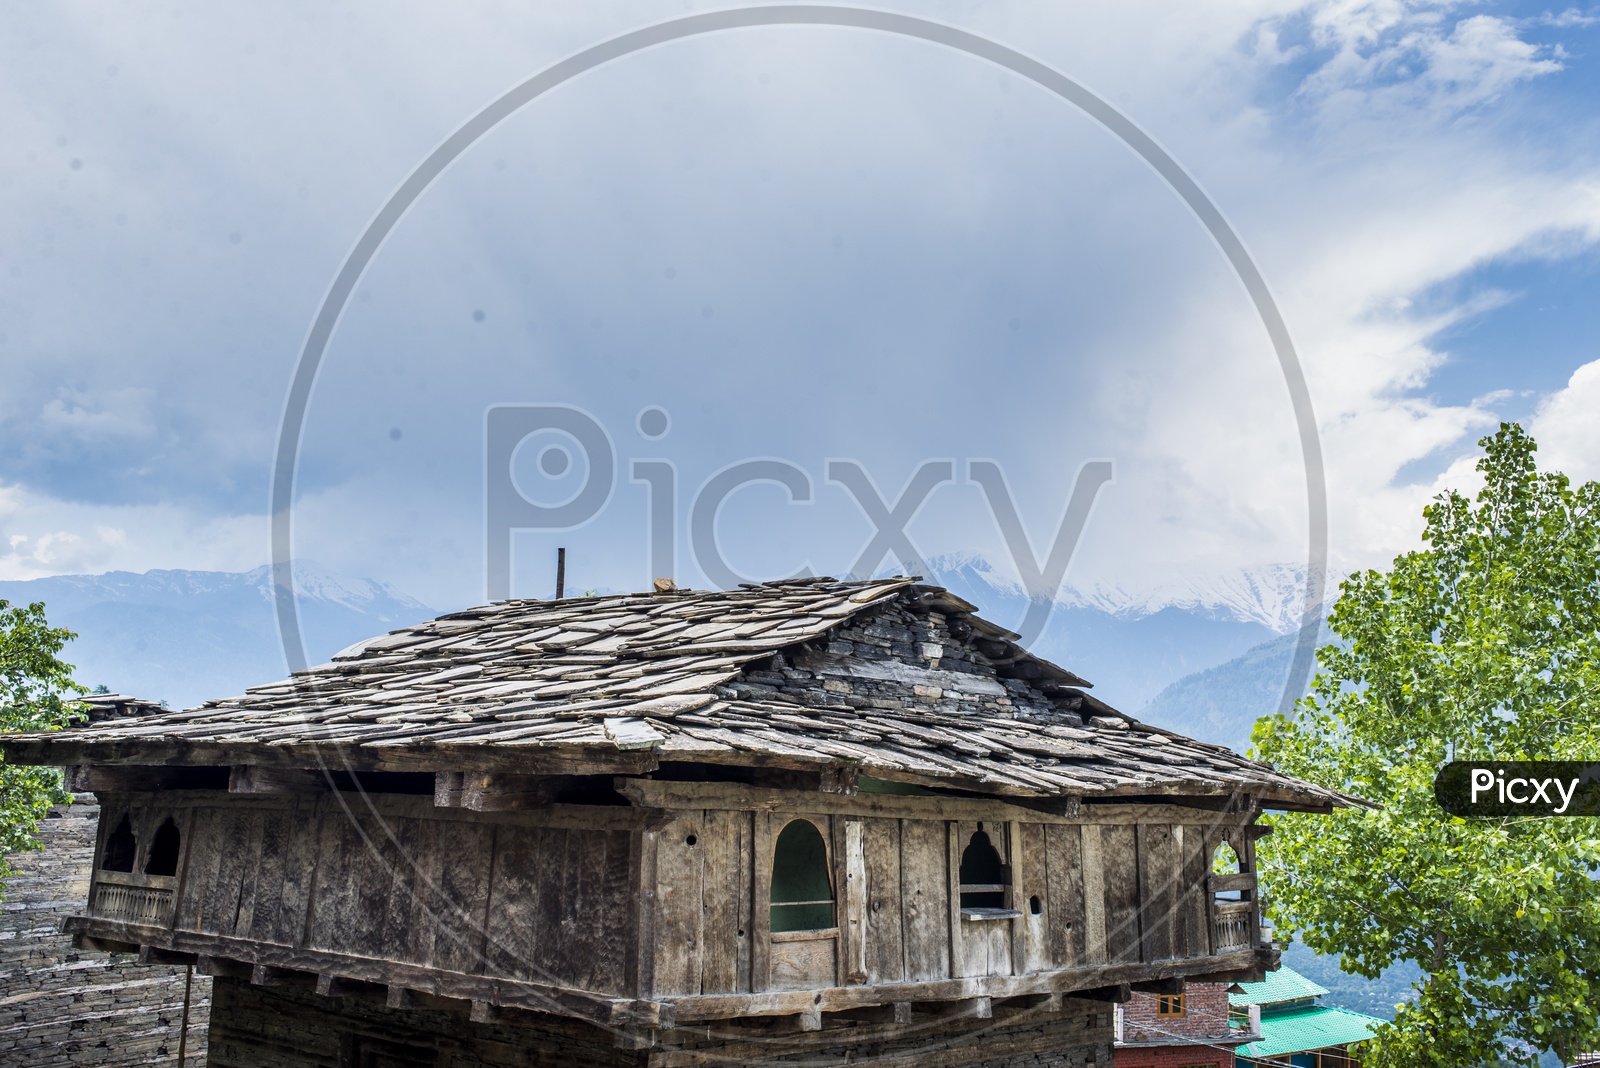 House in Chandrakhani Pass Malana Village trek, Himachal Pradesh